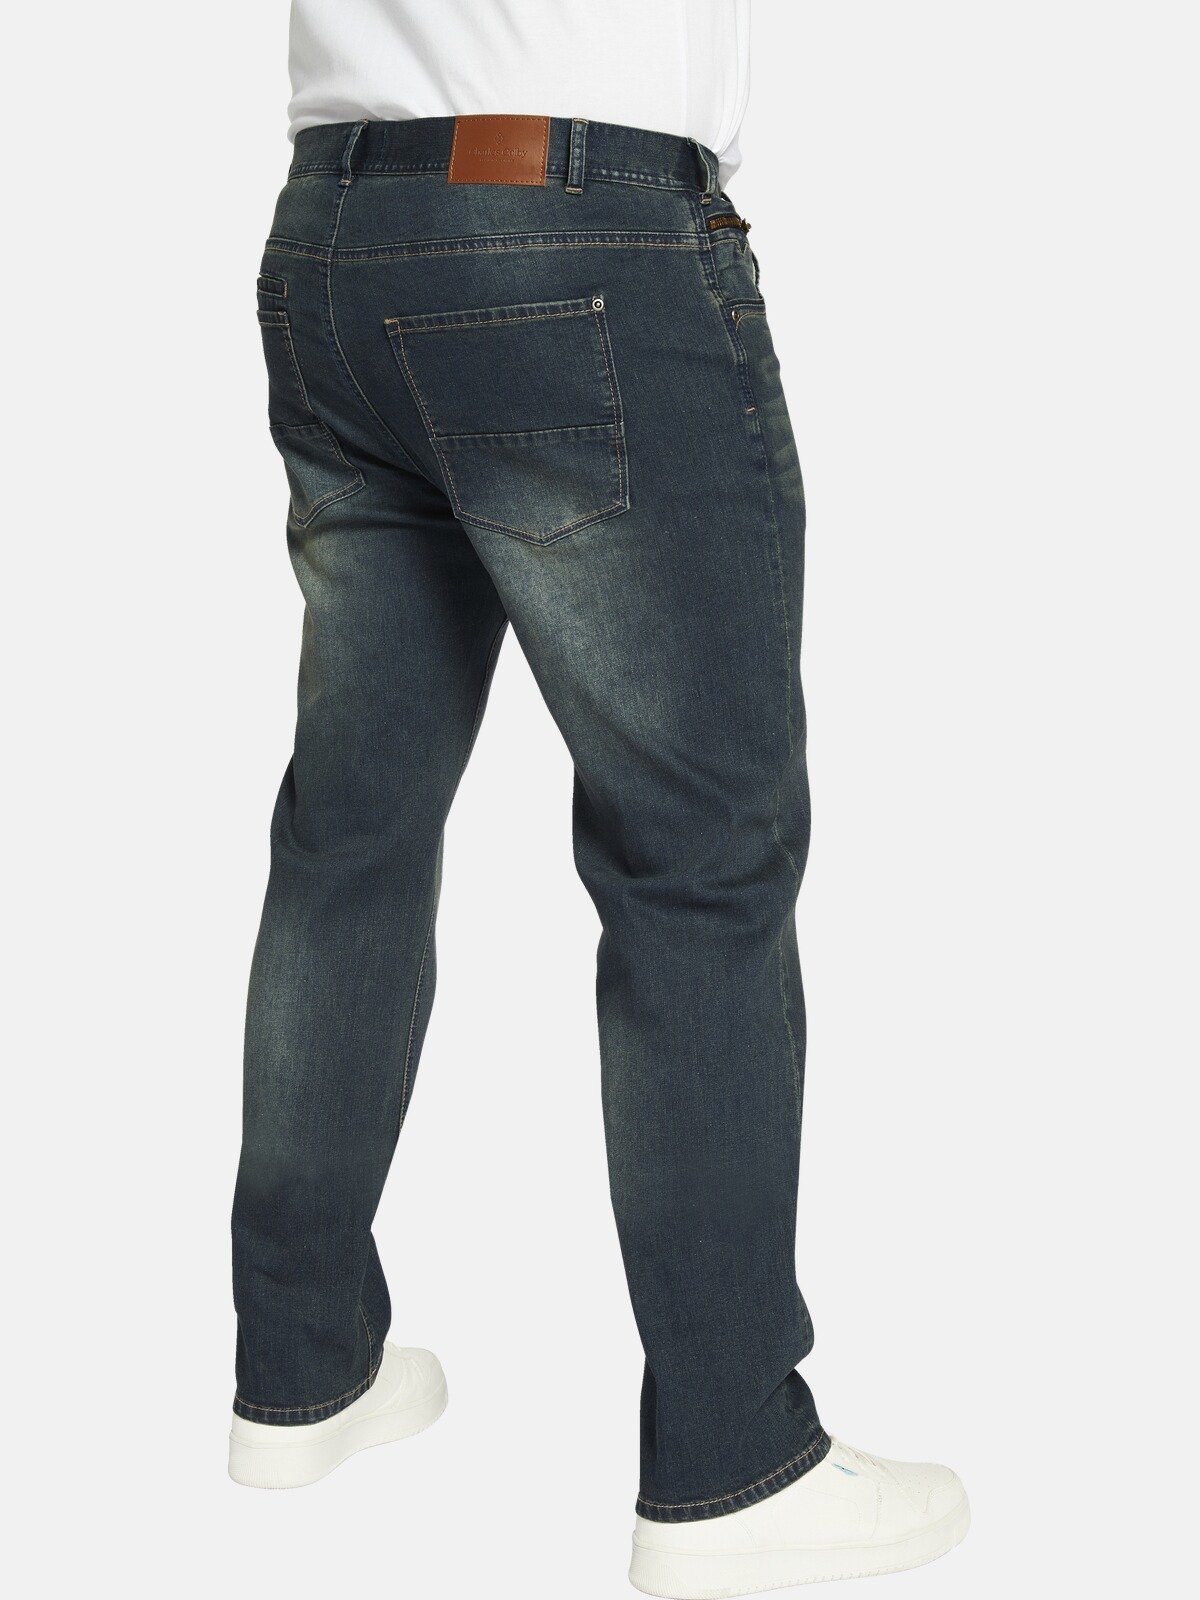 BARON TAHAMS 5-Pocket-Jeans Used-Look im Colby Charles